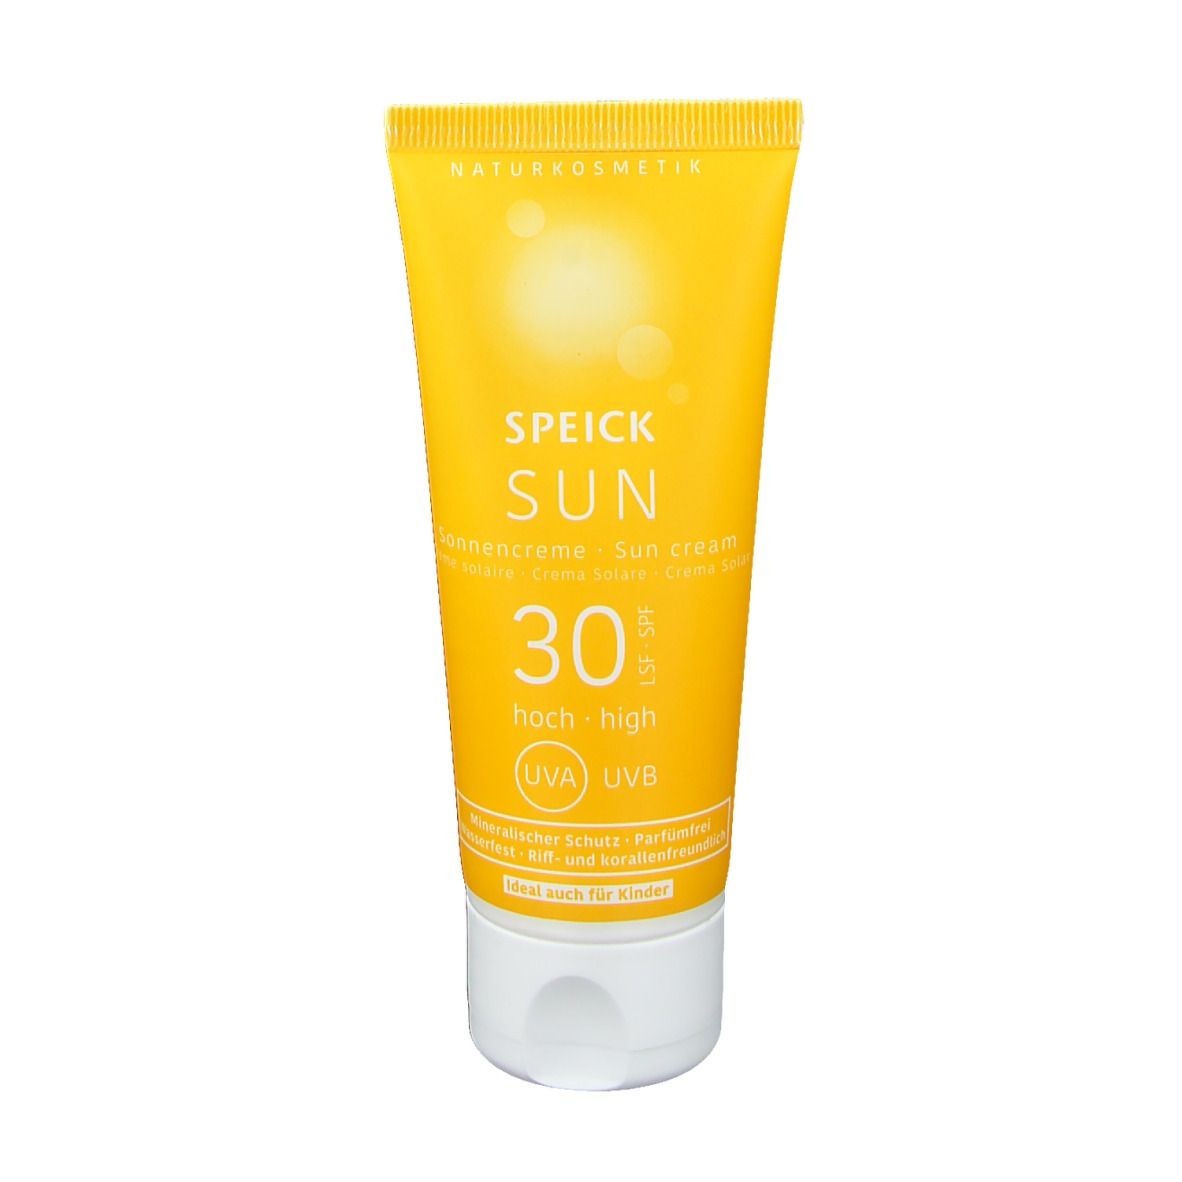 SPEICK SUN Crème solaire minéral SPF 30